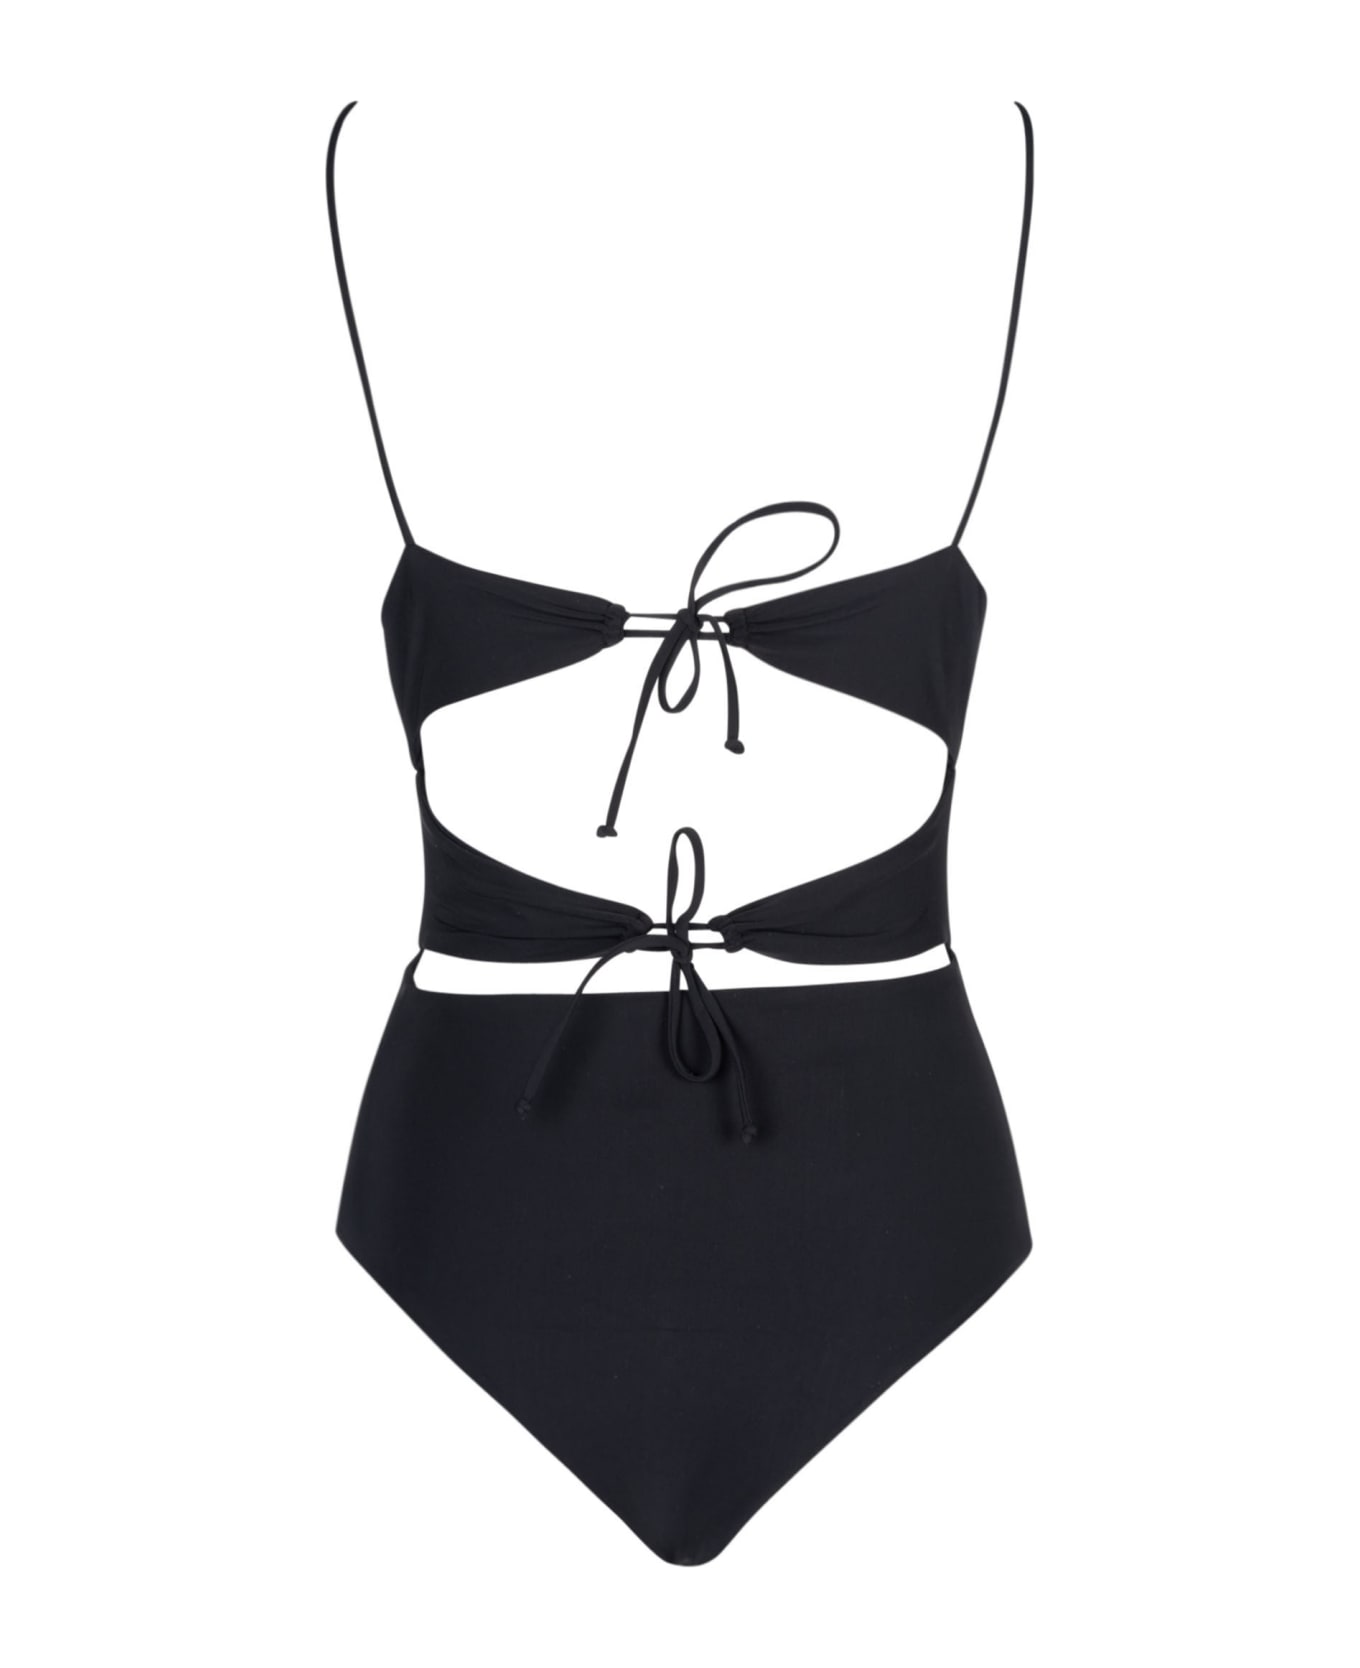 Nensi Dojaka One-piece Draped Swimsuit - Black